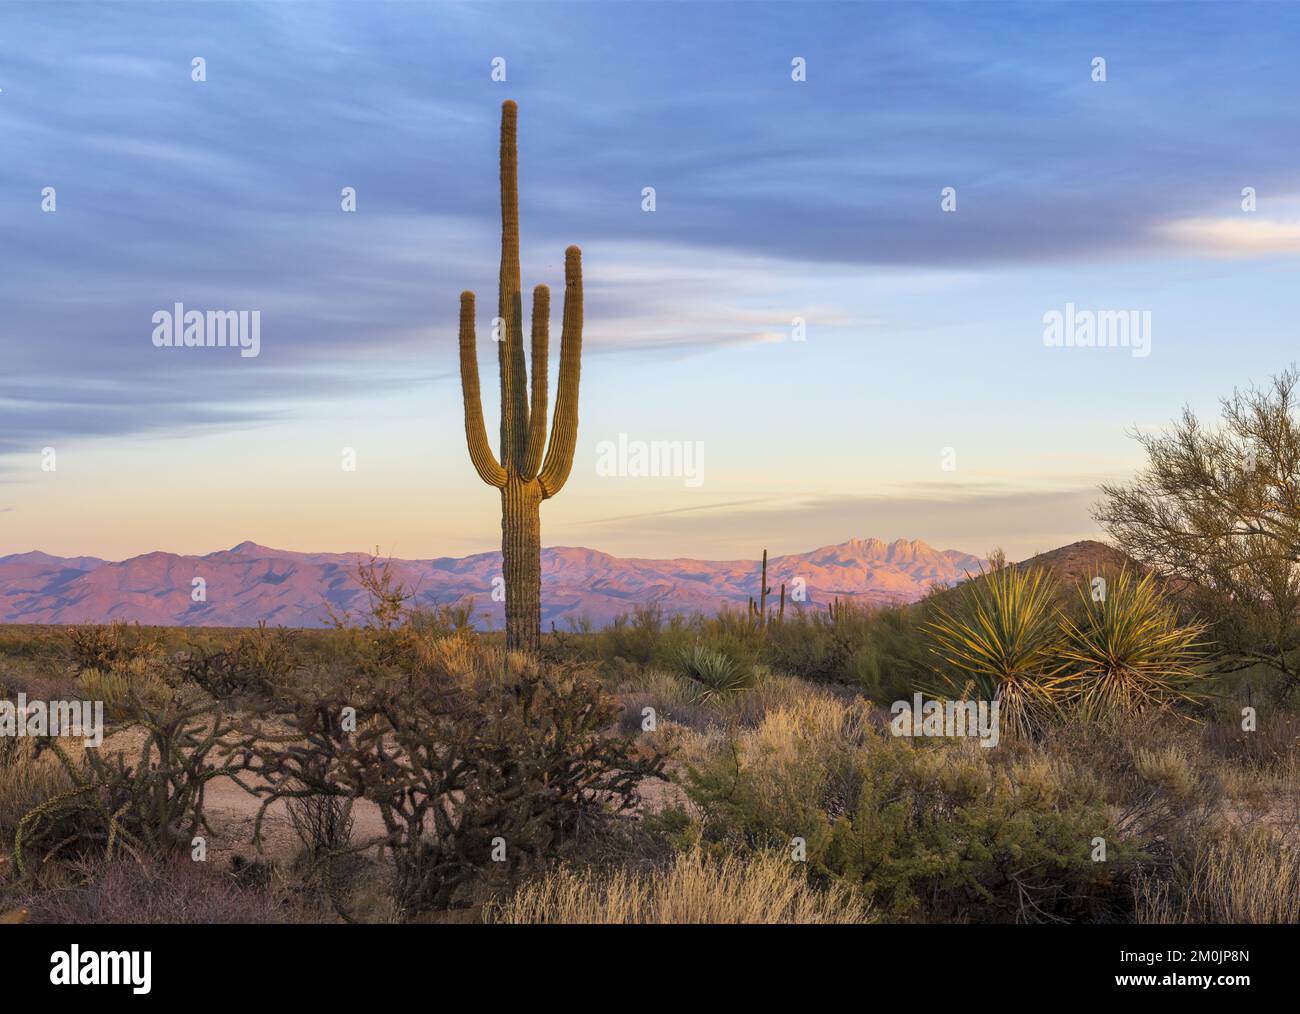 Lone Saguaro Cactus At Dusk In The Phoenix AZ Area Stock Photo